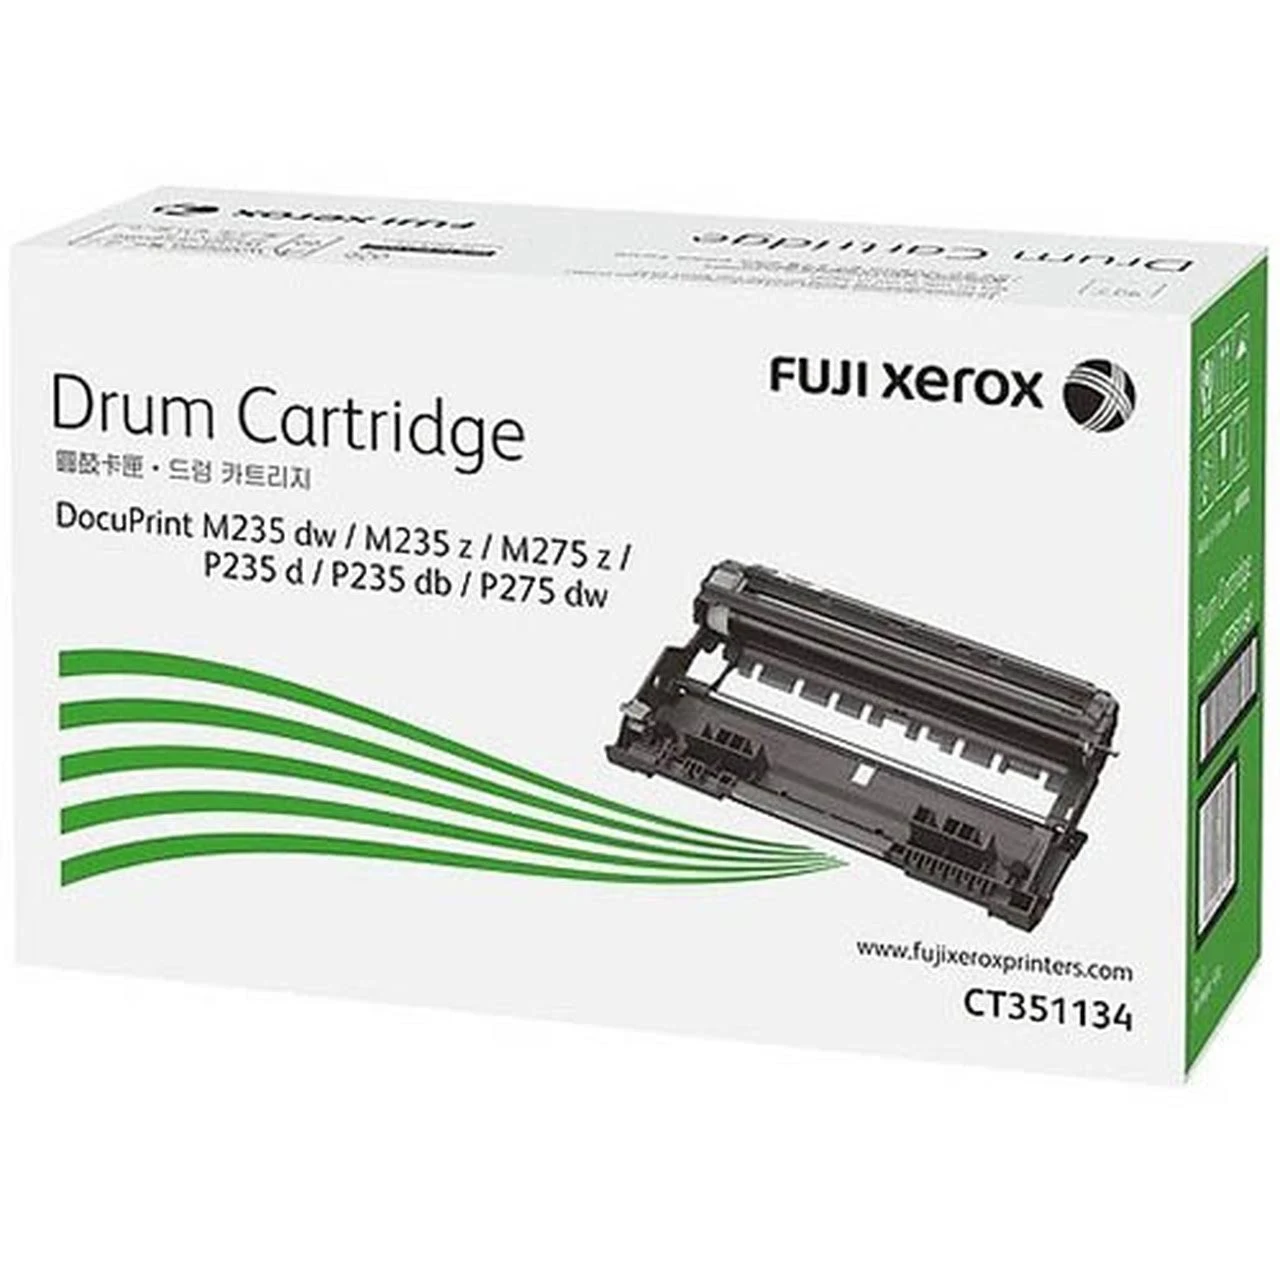 Fuji Xerox CT351134 Drum Unit 12,000 pages for Fuji Xerox DocuPrint Series Printer